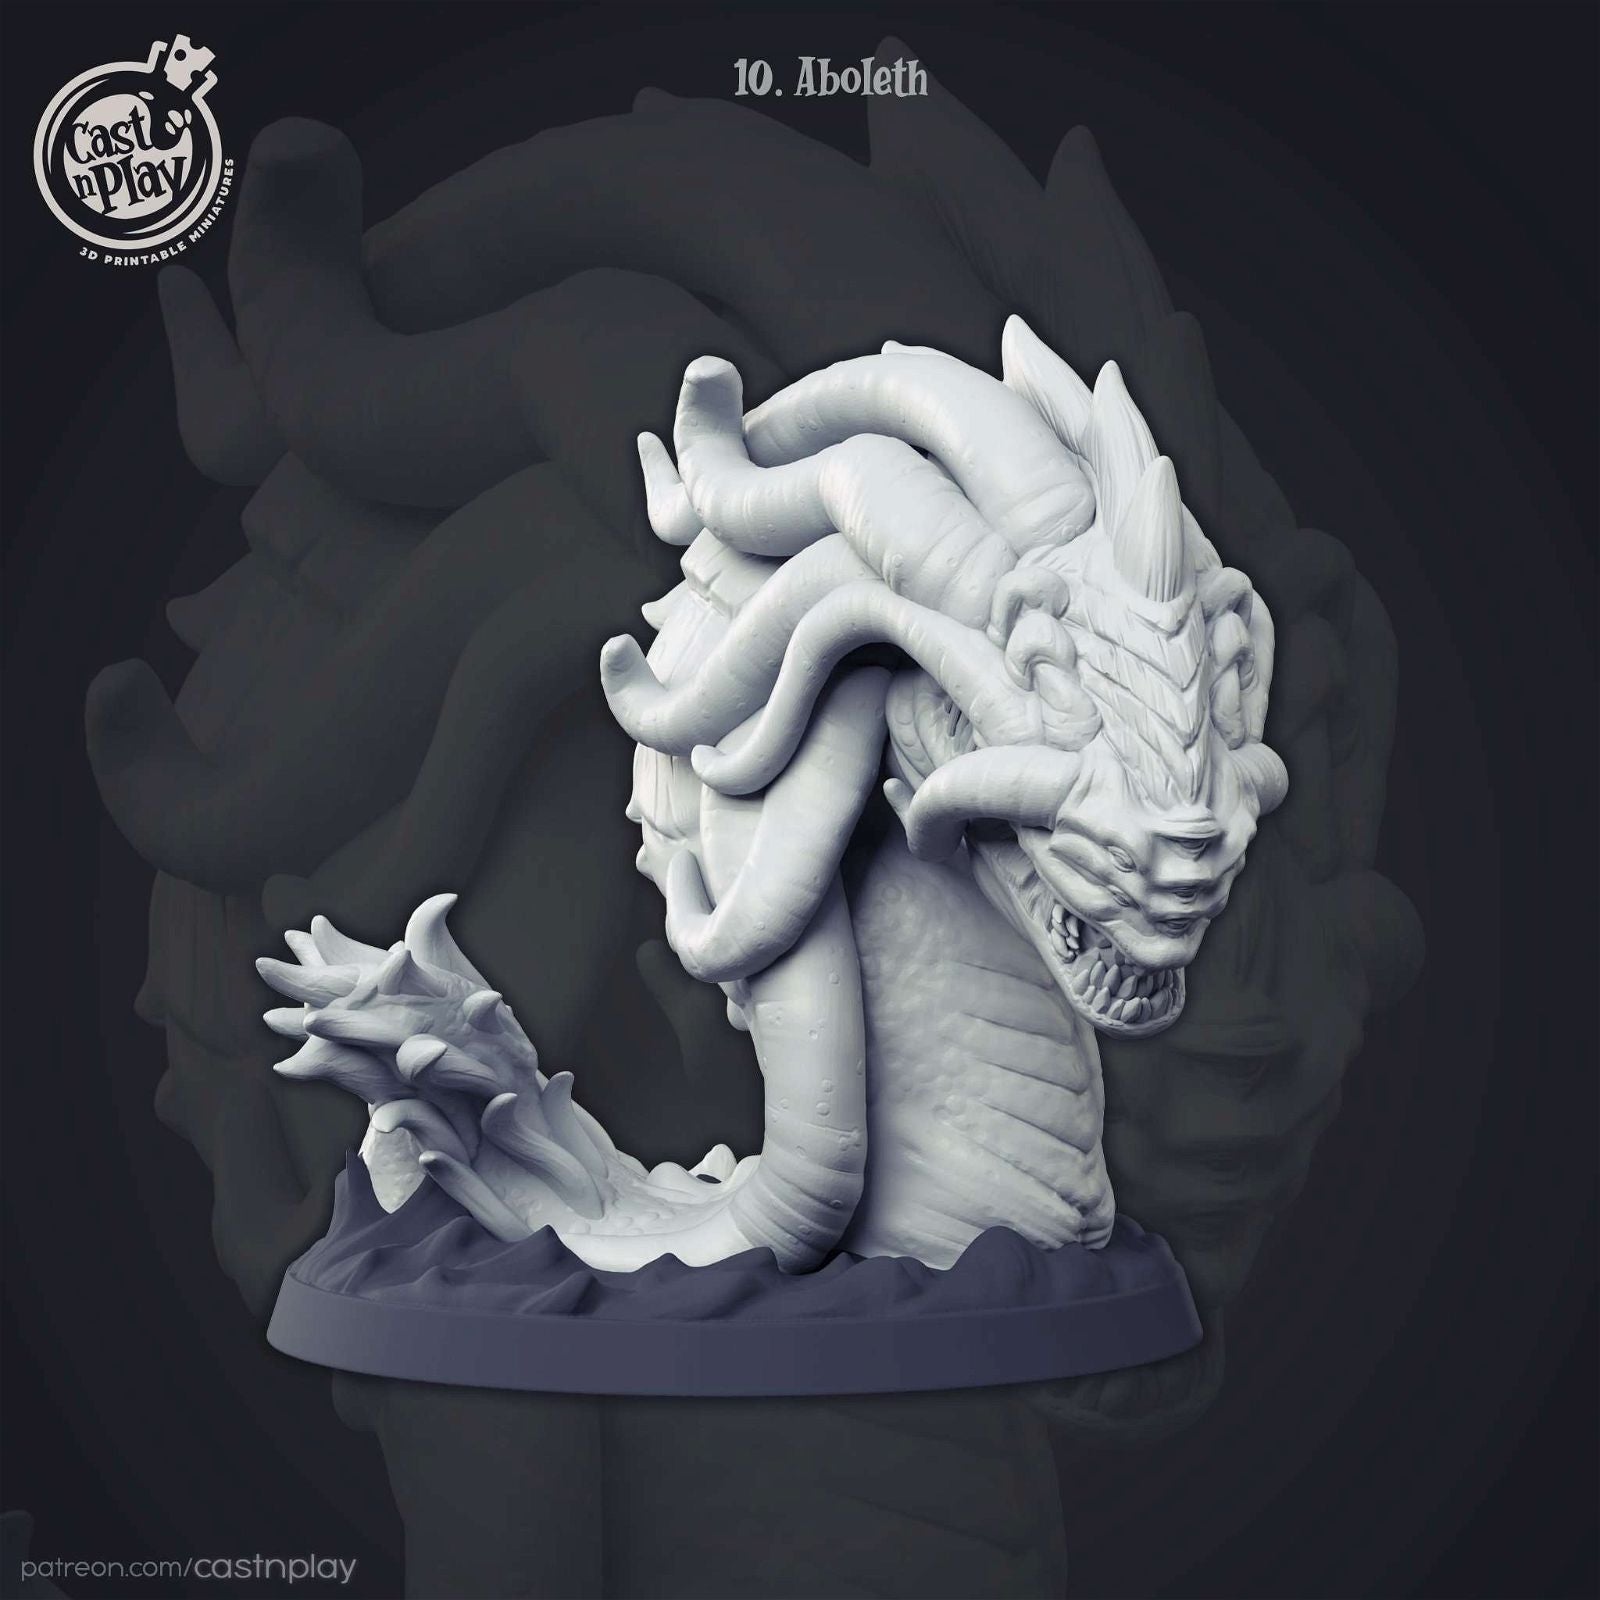 Aboleth - The Printable Dragon